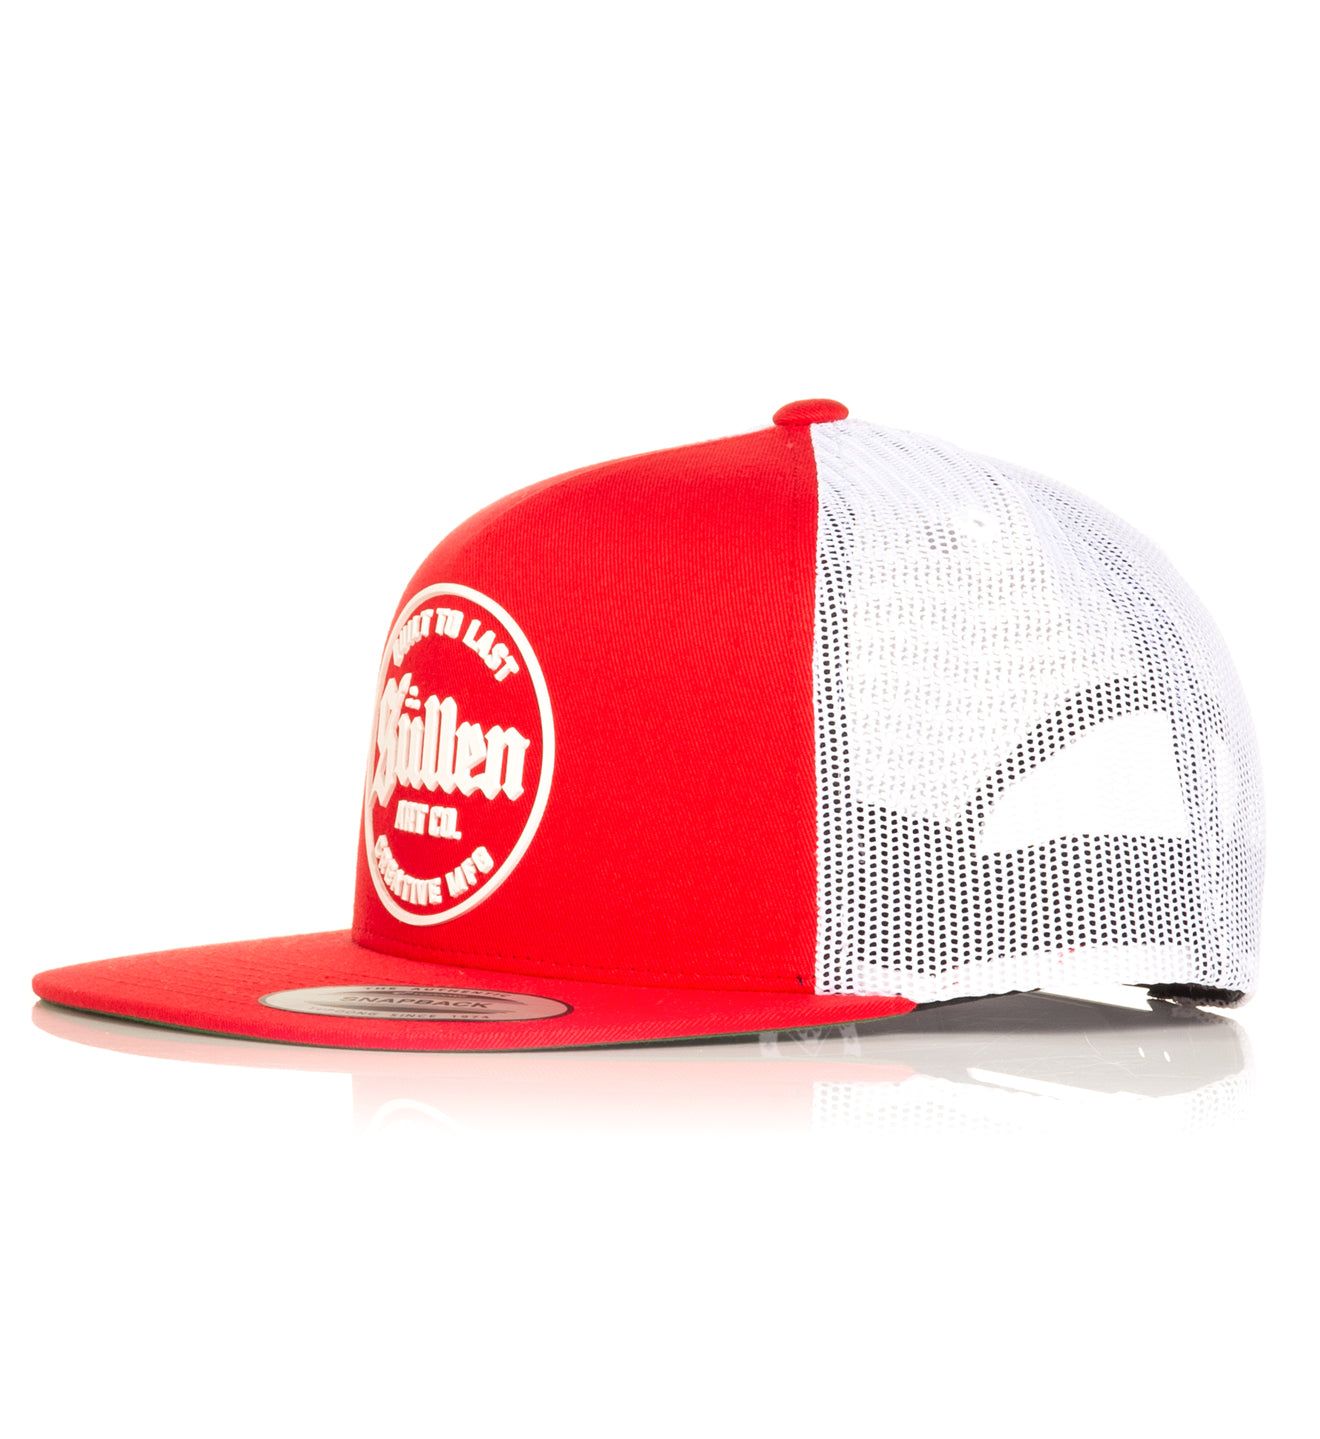 Weld Hat - Red/White - 